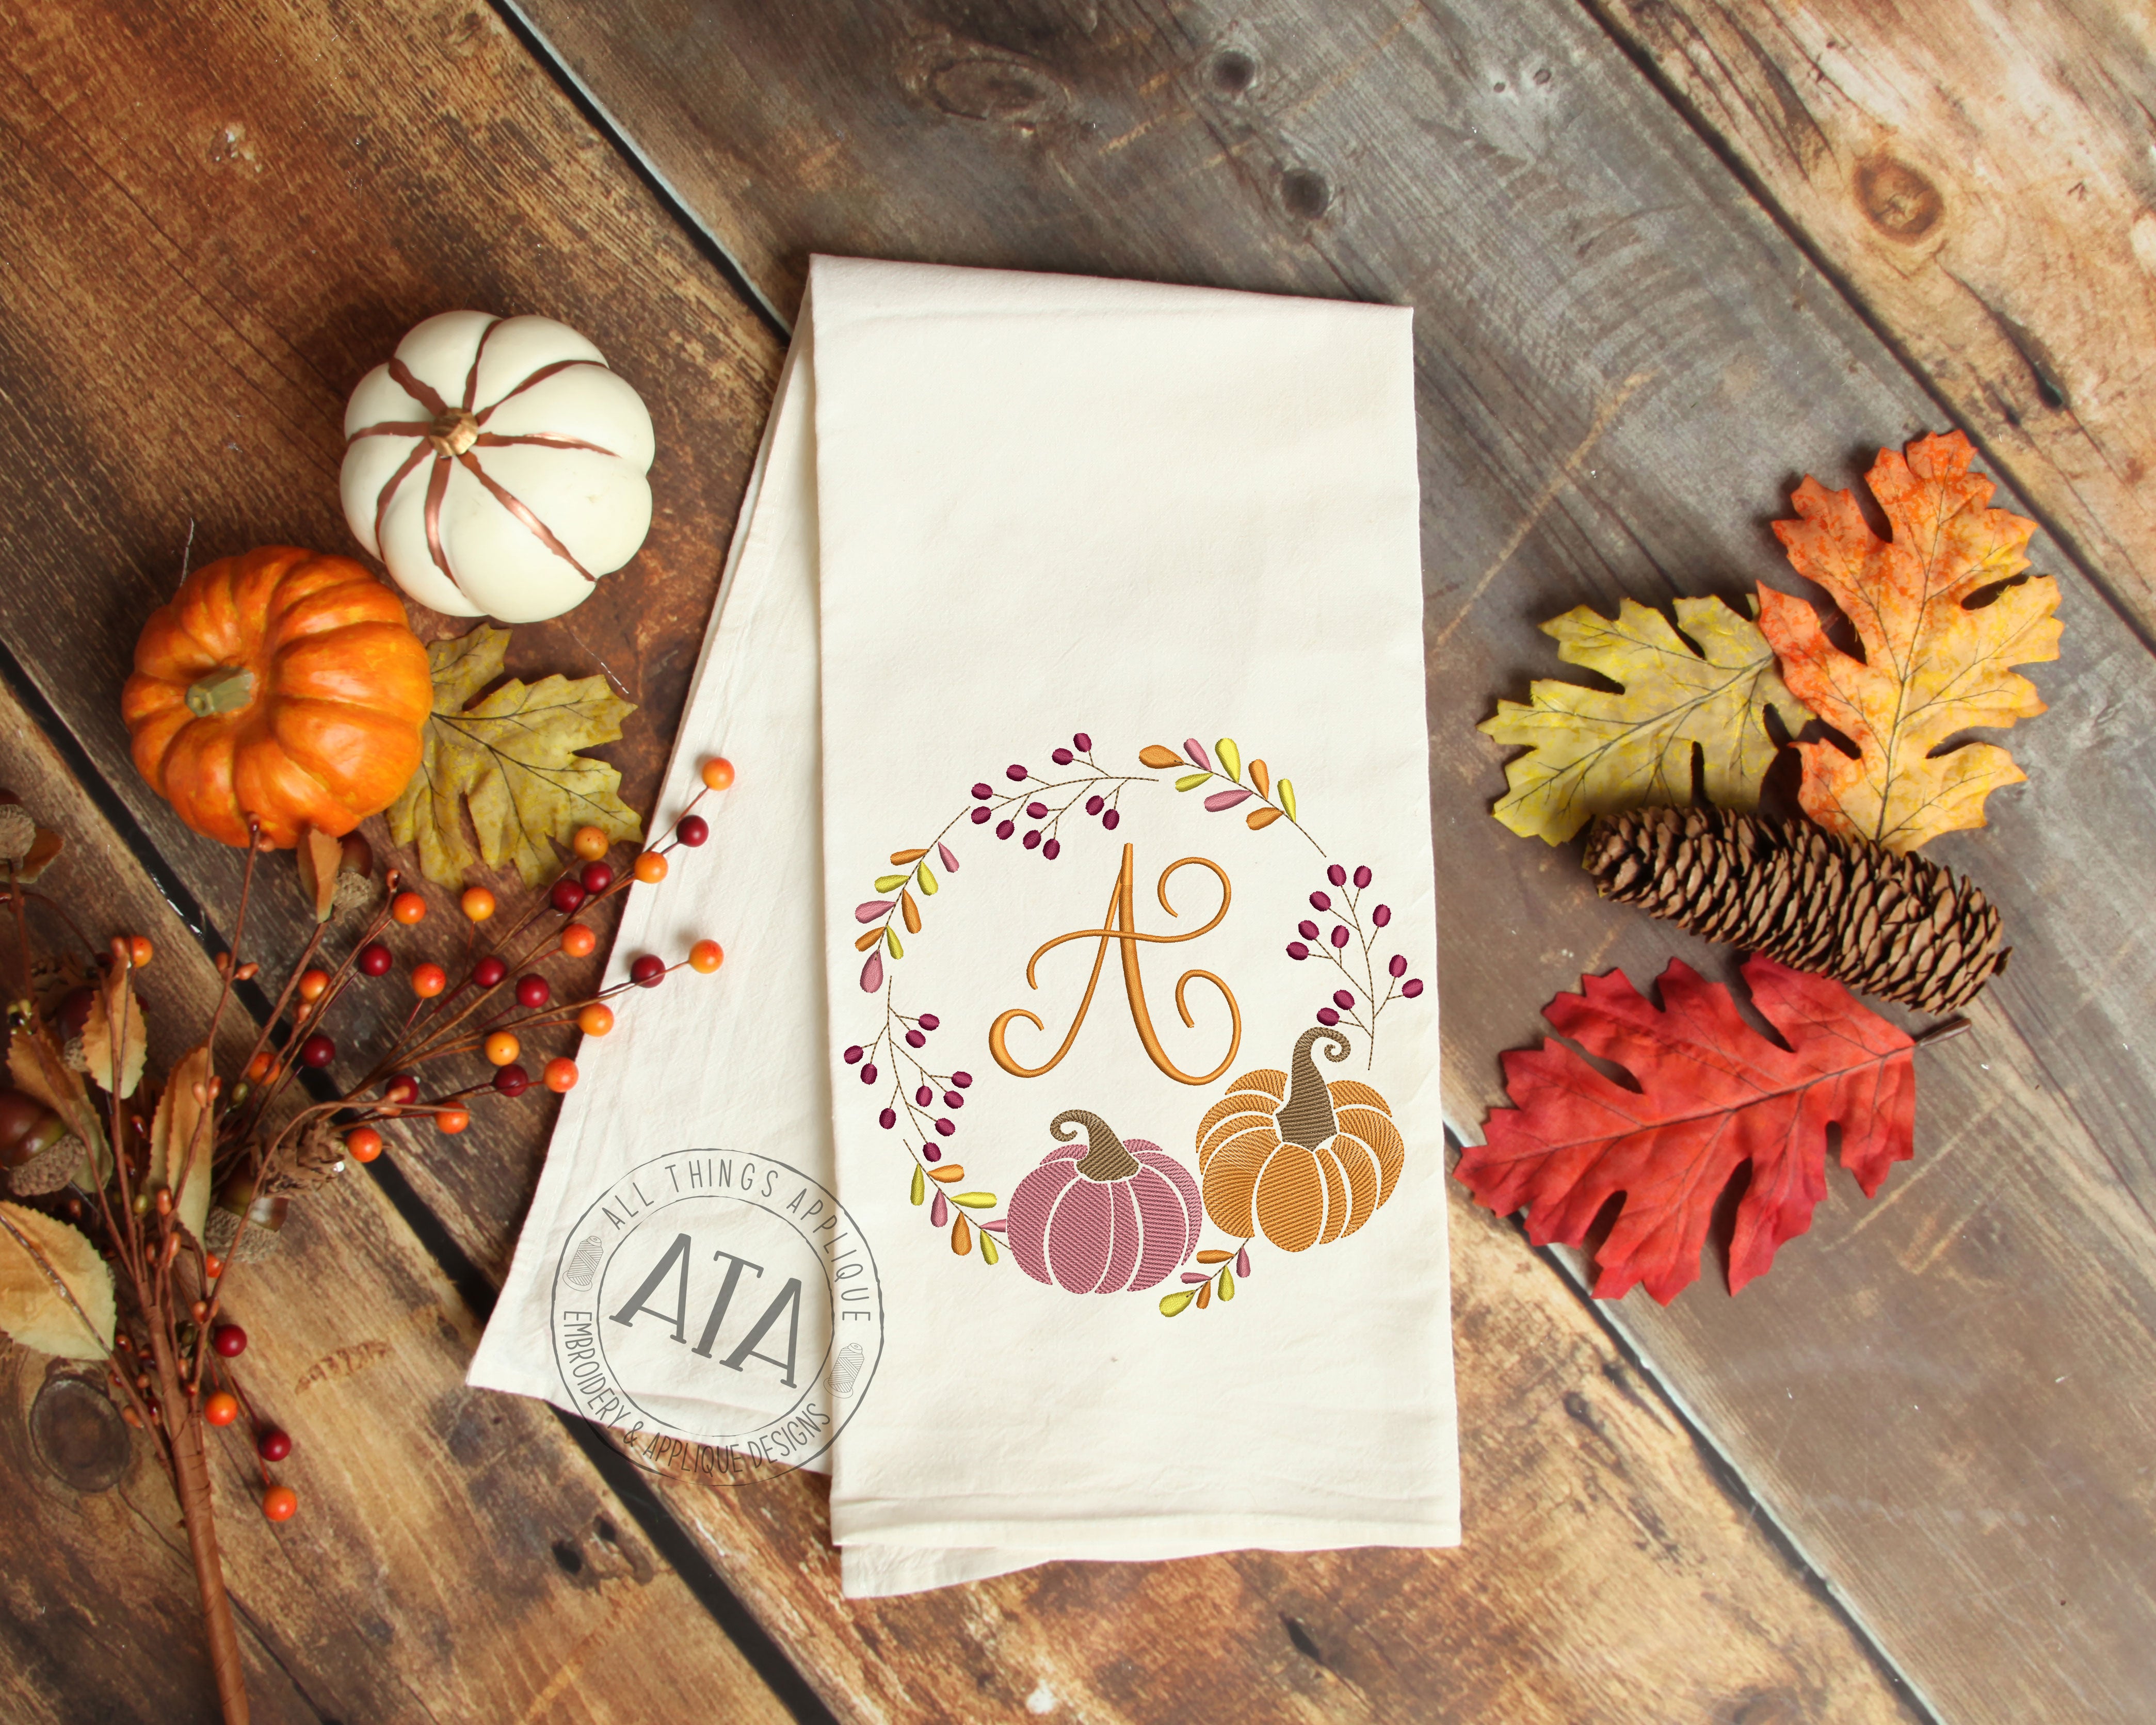 Pumpkin Trio Monogram Square Frame Machine Embroidery Design Patch  Halloween Thanksgiving